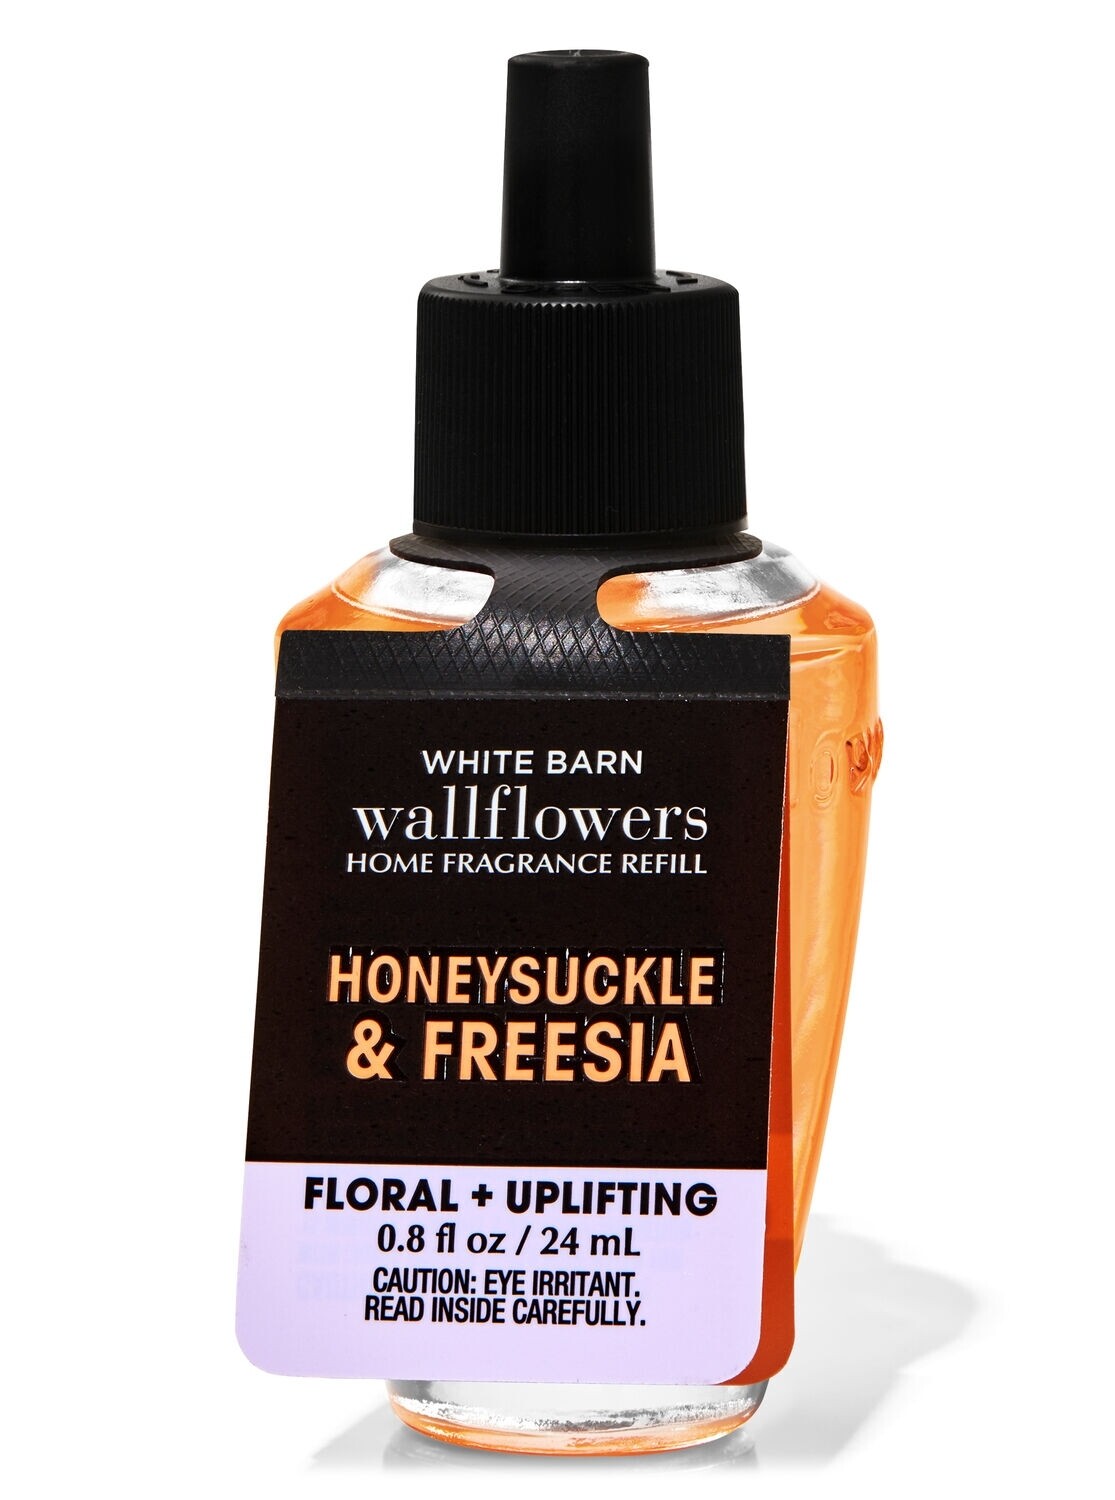 Bath and body works wallflower refill- honeysuckle & freesia 